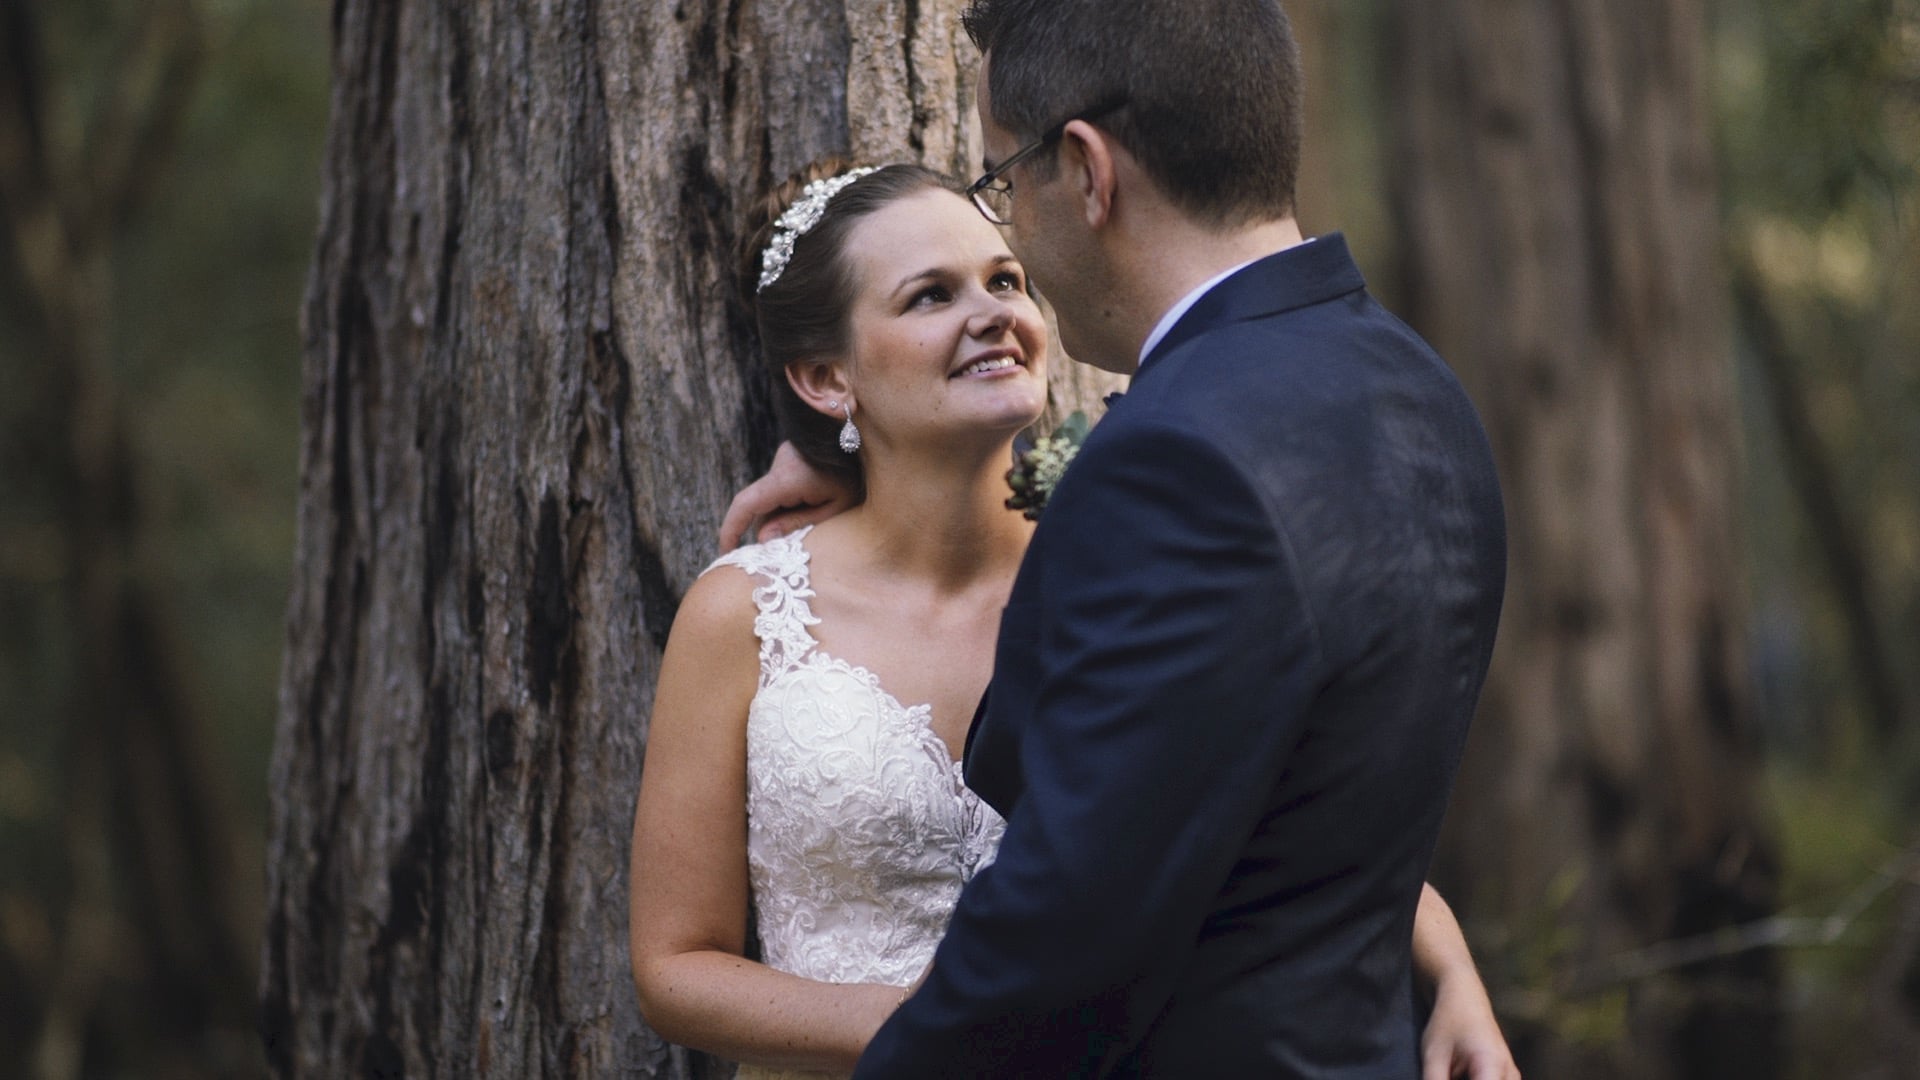 Michelle & Ross Wedding Highlight Film / Video - Wildwood, Kangaroo Valley NSW